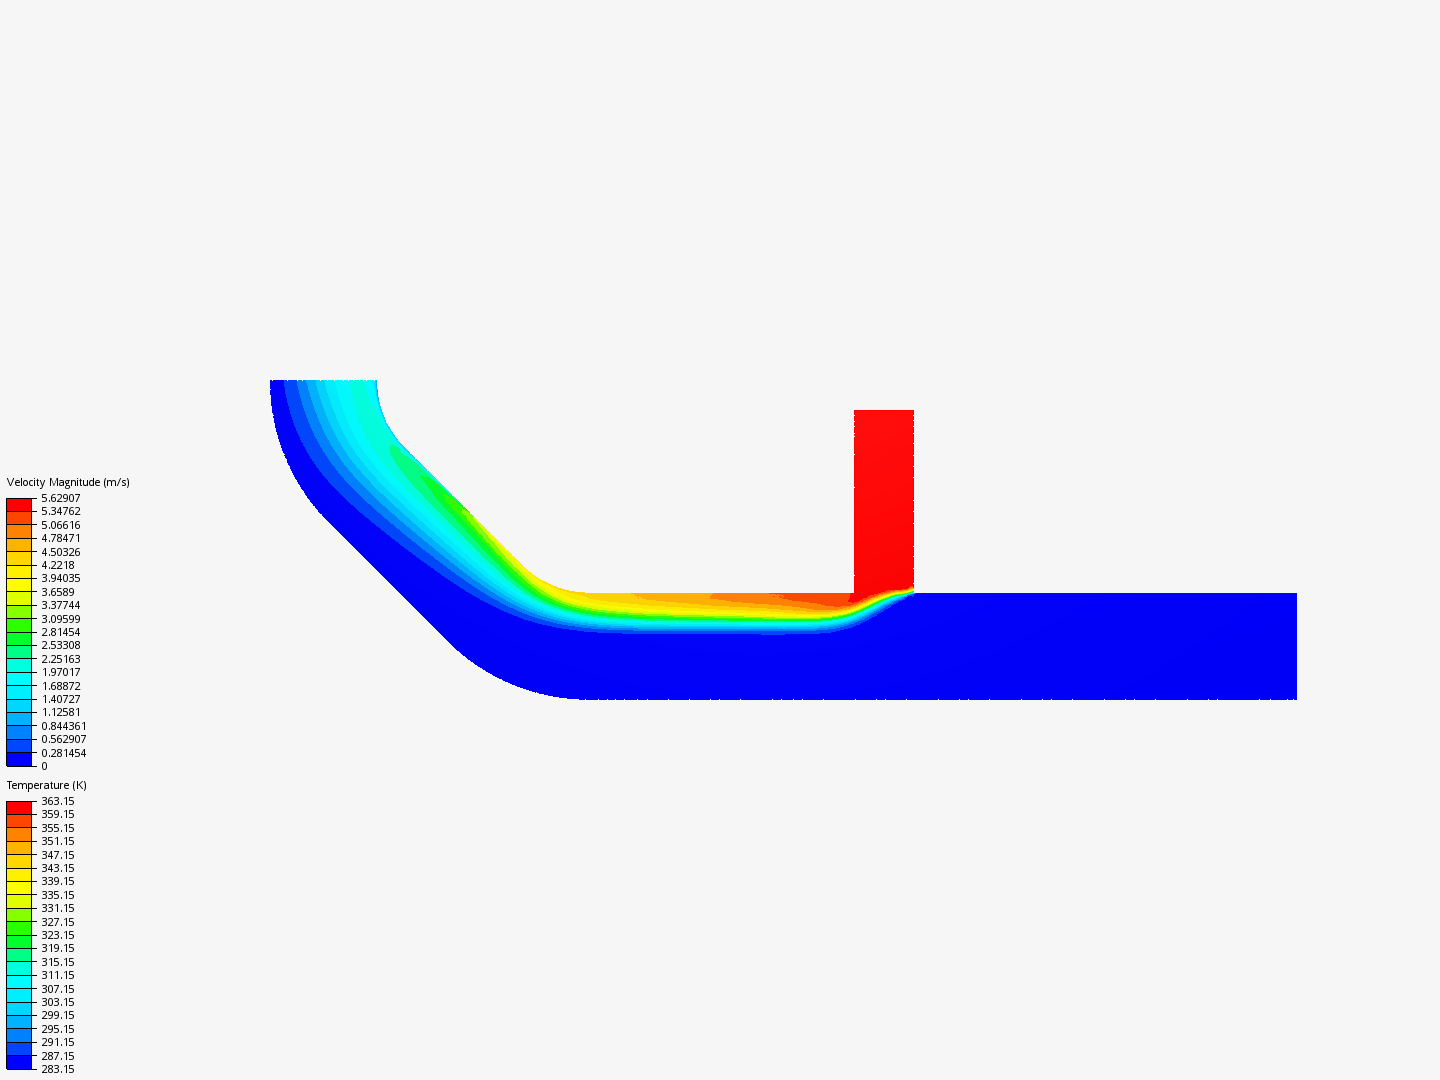 Tutorial 2: Pipe junction flow - Copy image